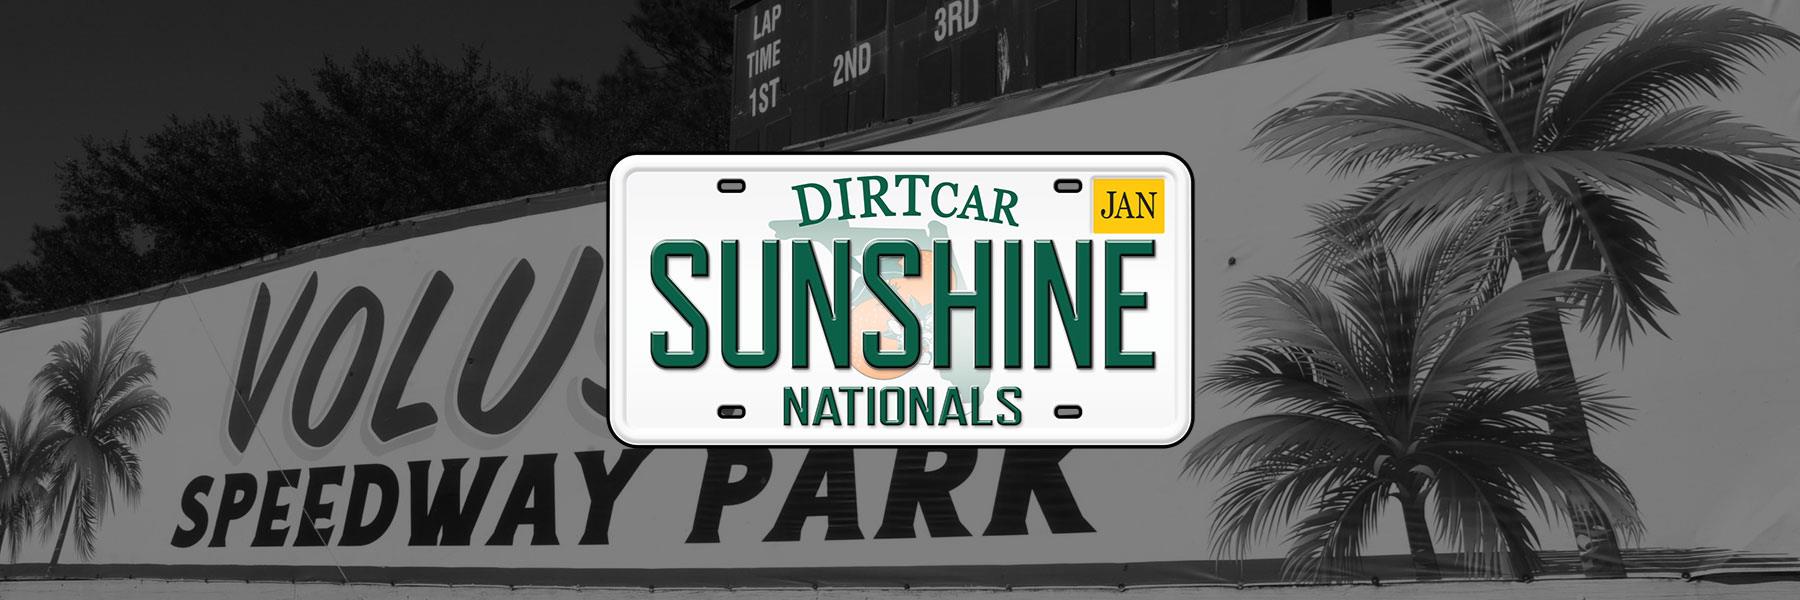 DIRTcar Sunshine Nationals